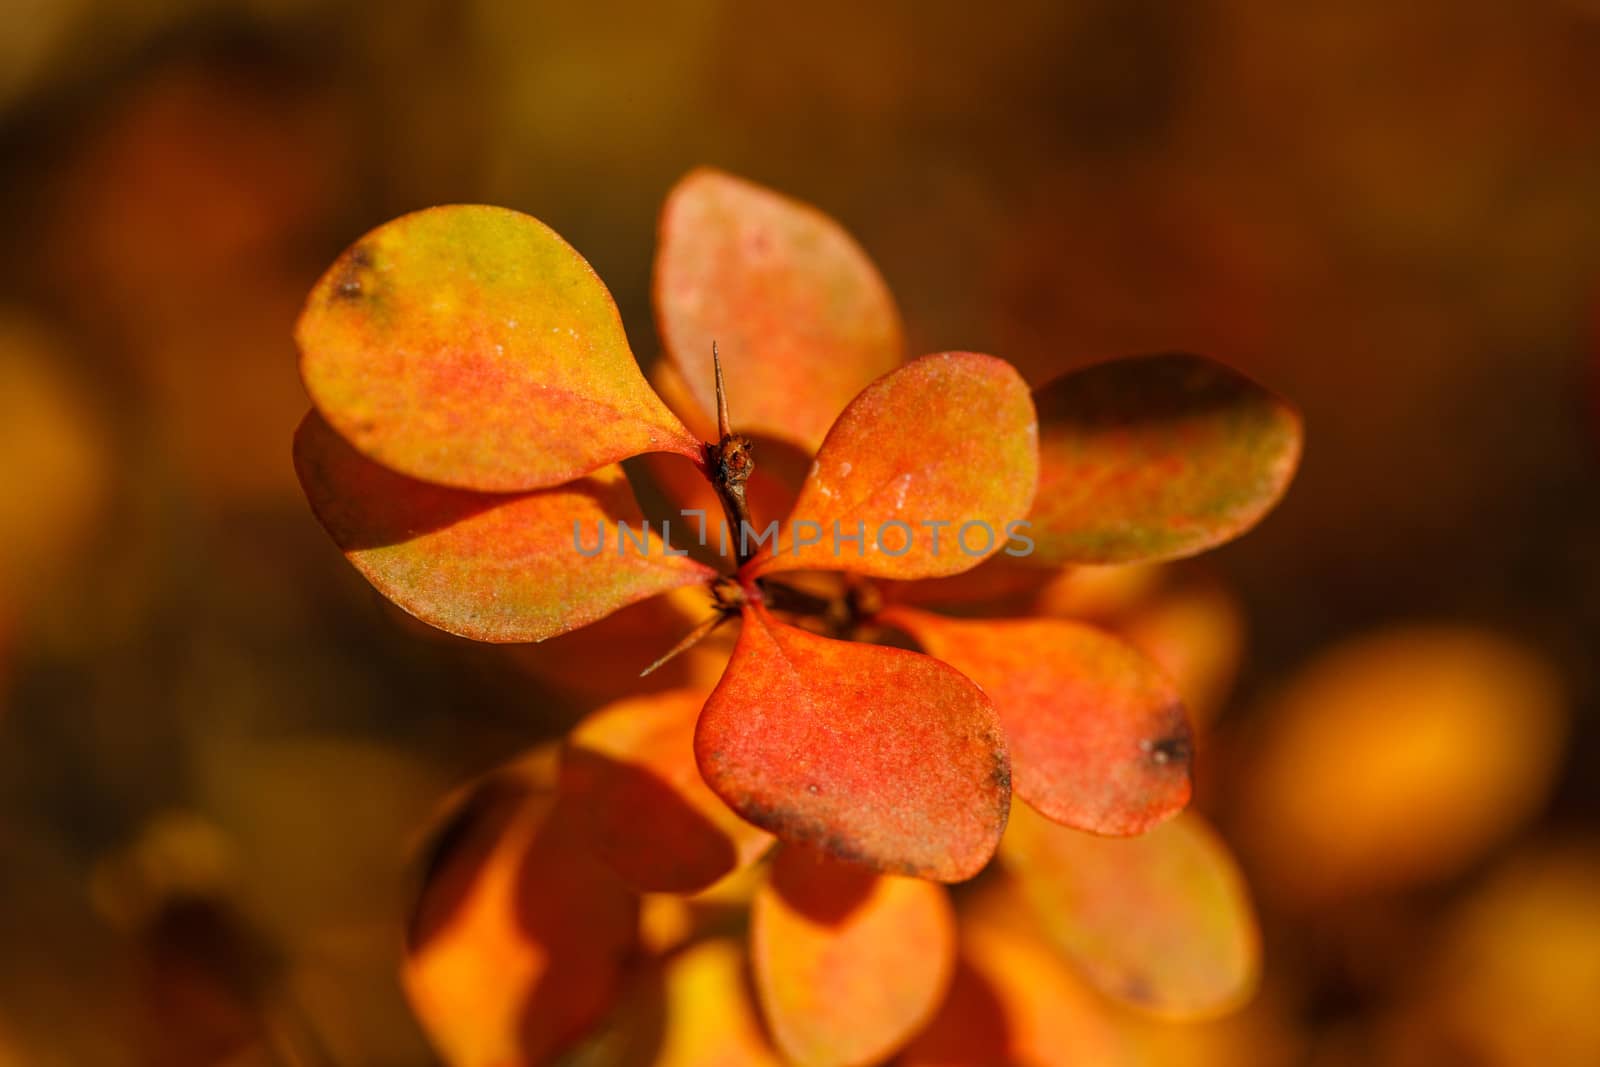 Fading autumn leaves close-up shot